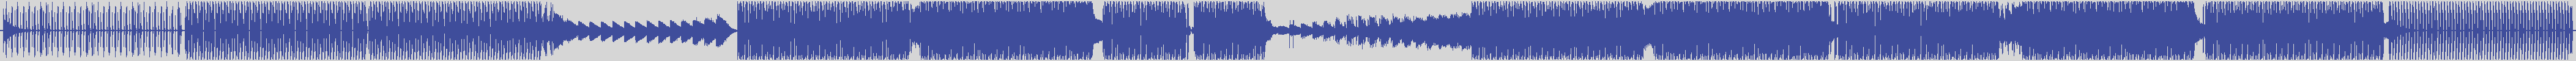 atomic_recordings [AR011] Stylus Robb, Mattias - Wow! [Original Mix] audio wave form